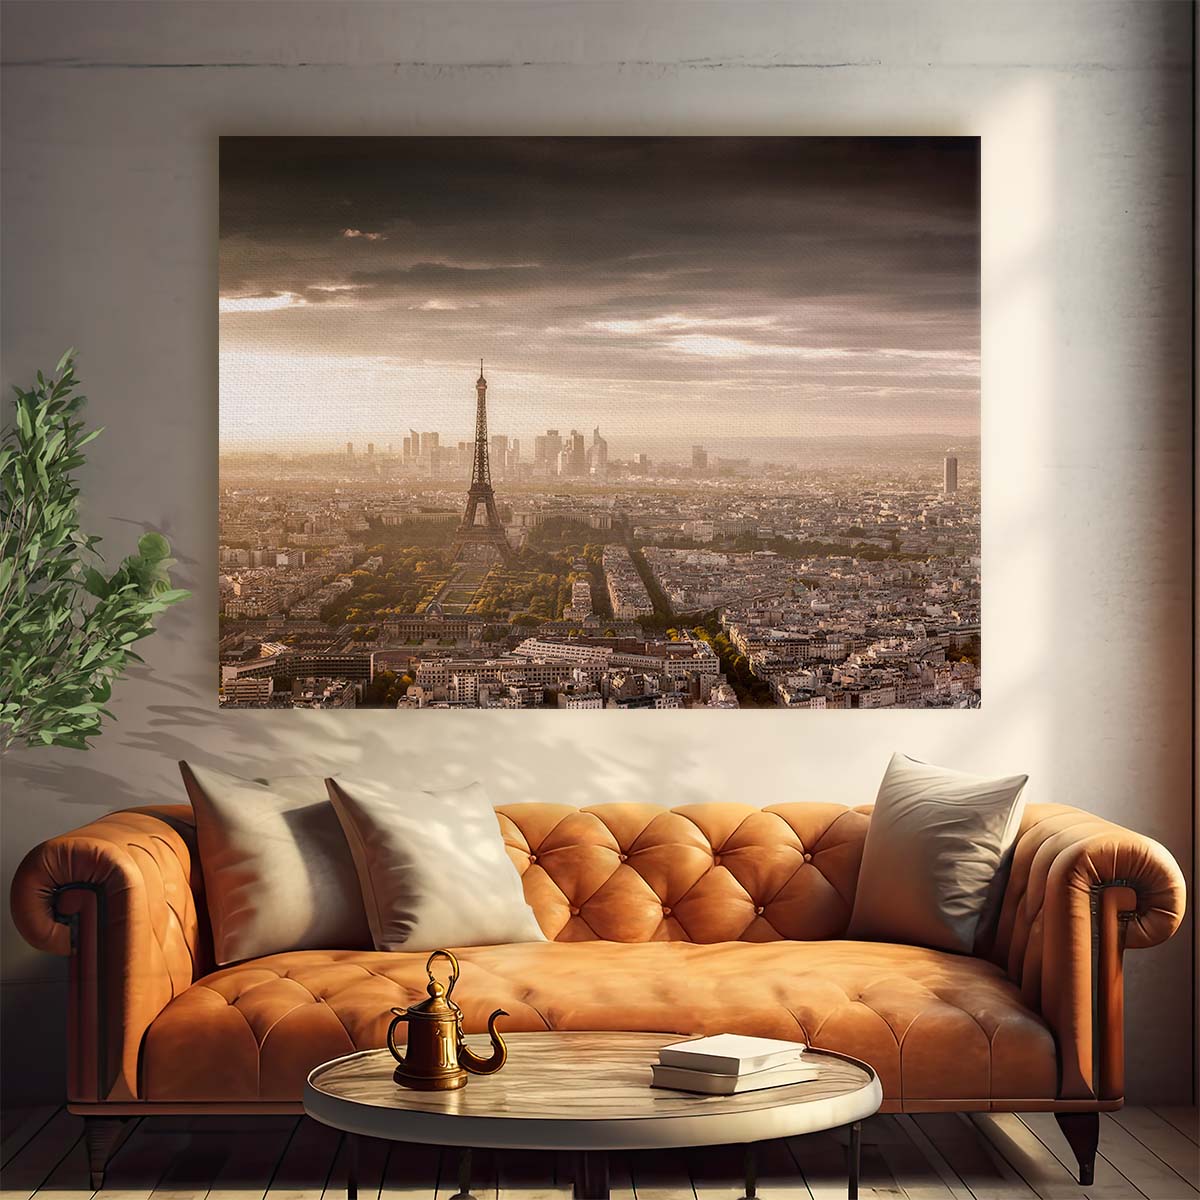 Paris Eiffel Tower Sunset Iconic Cityscape Photography Wall Art